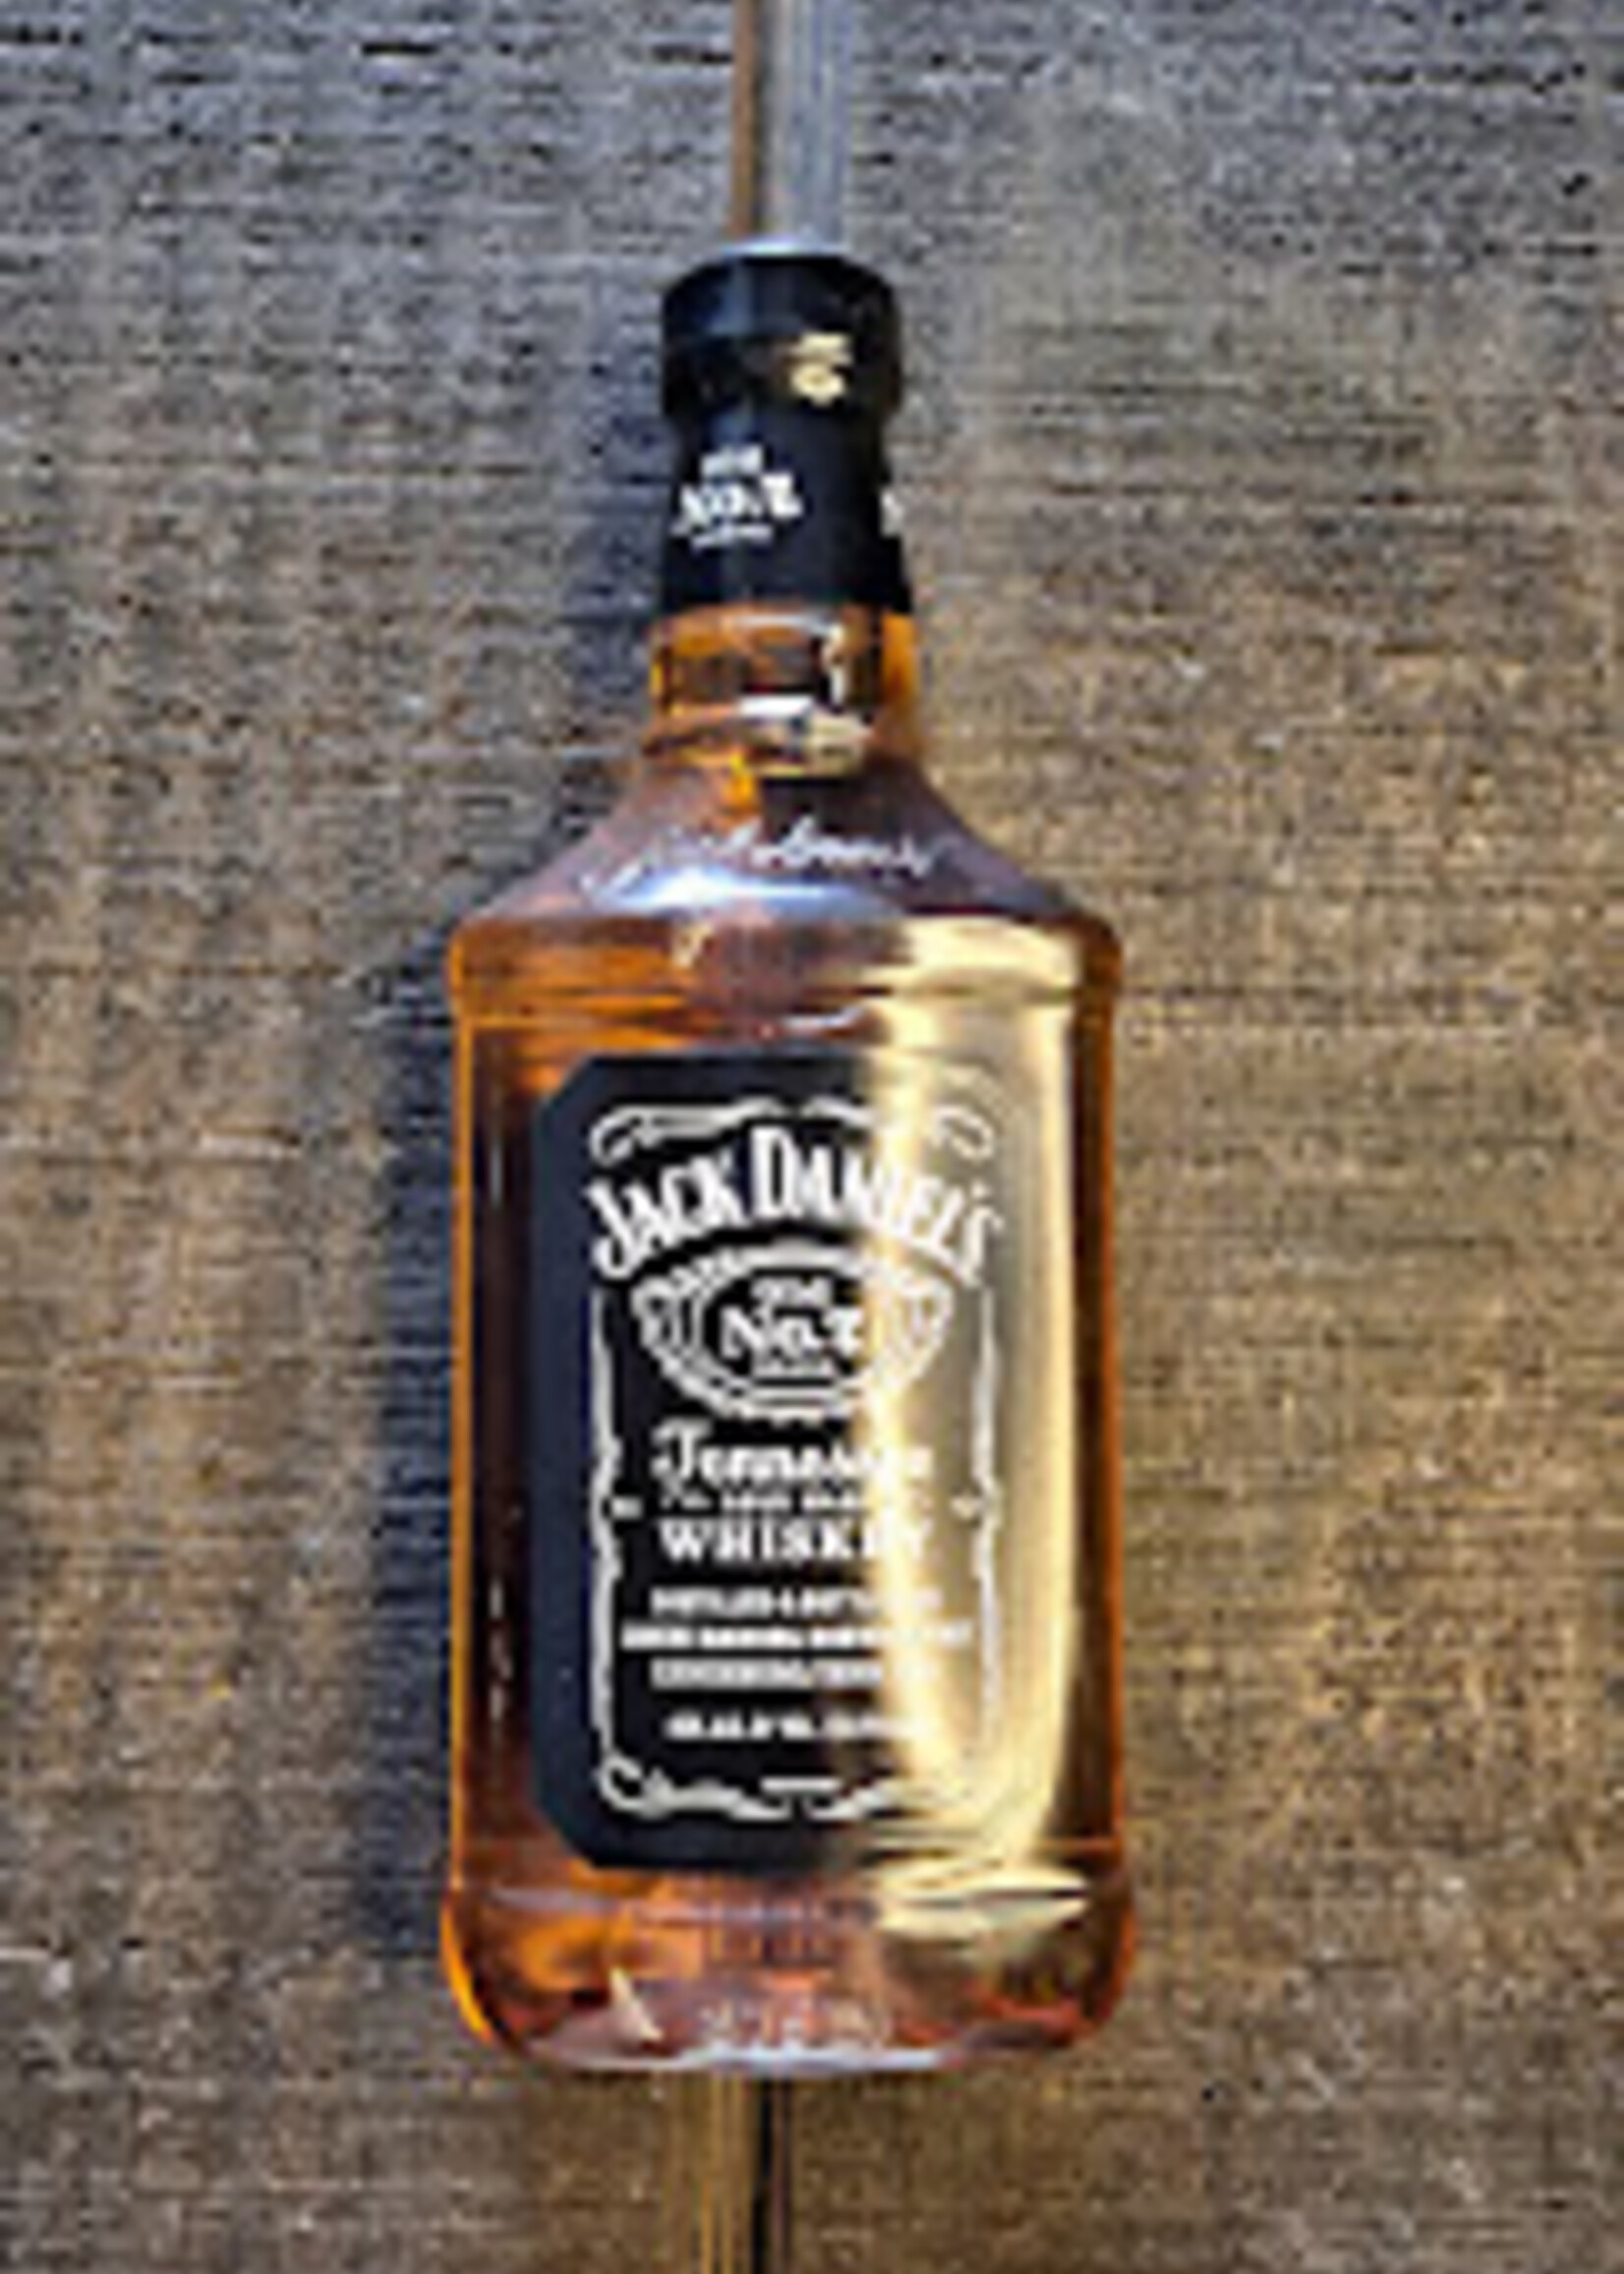 Jack Daniels Black 375ml